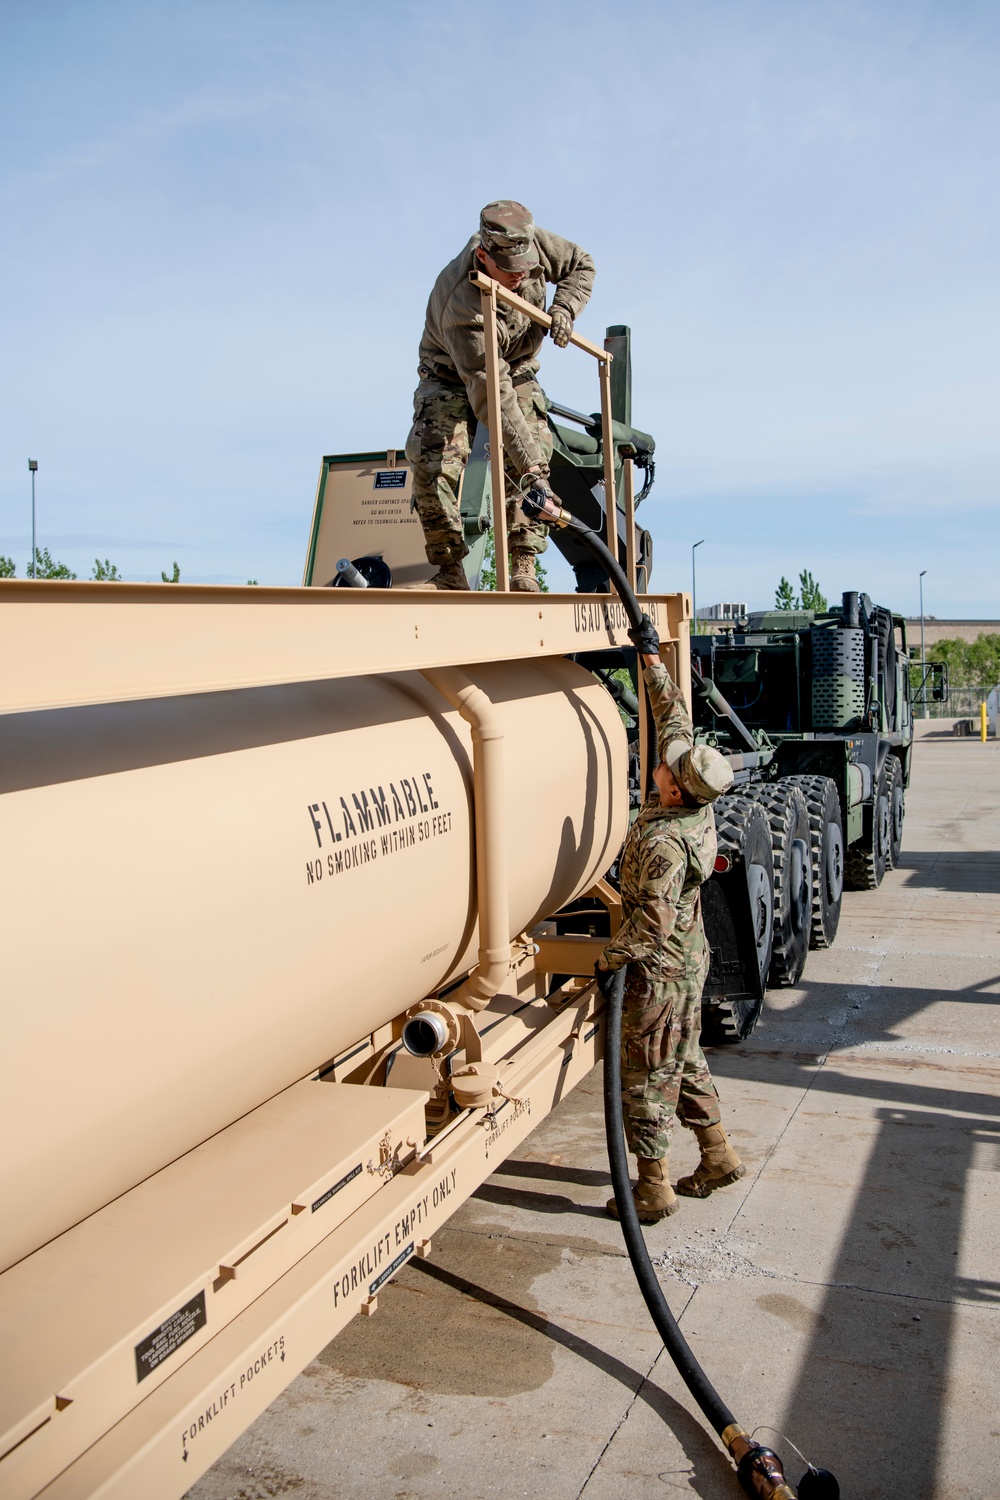 Michigan National Guard members maintain a modular fuel system tank rack module